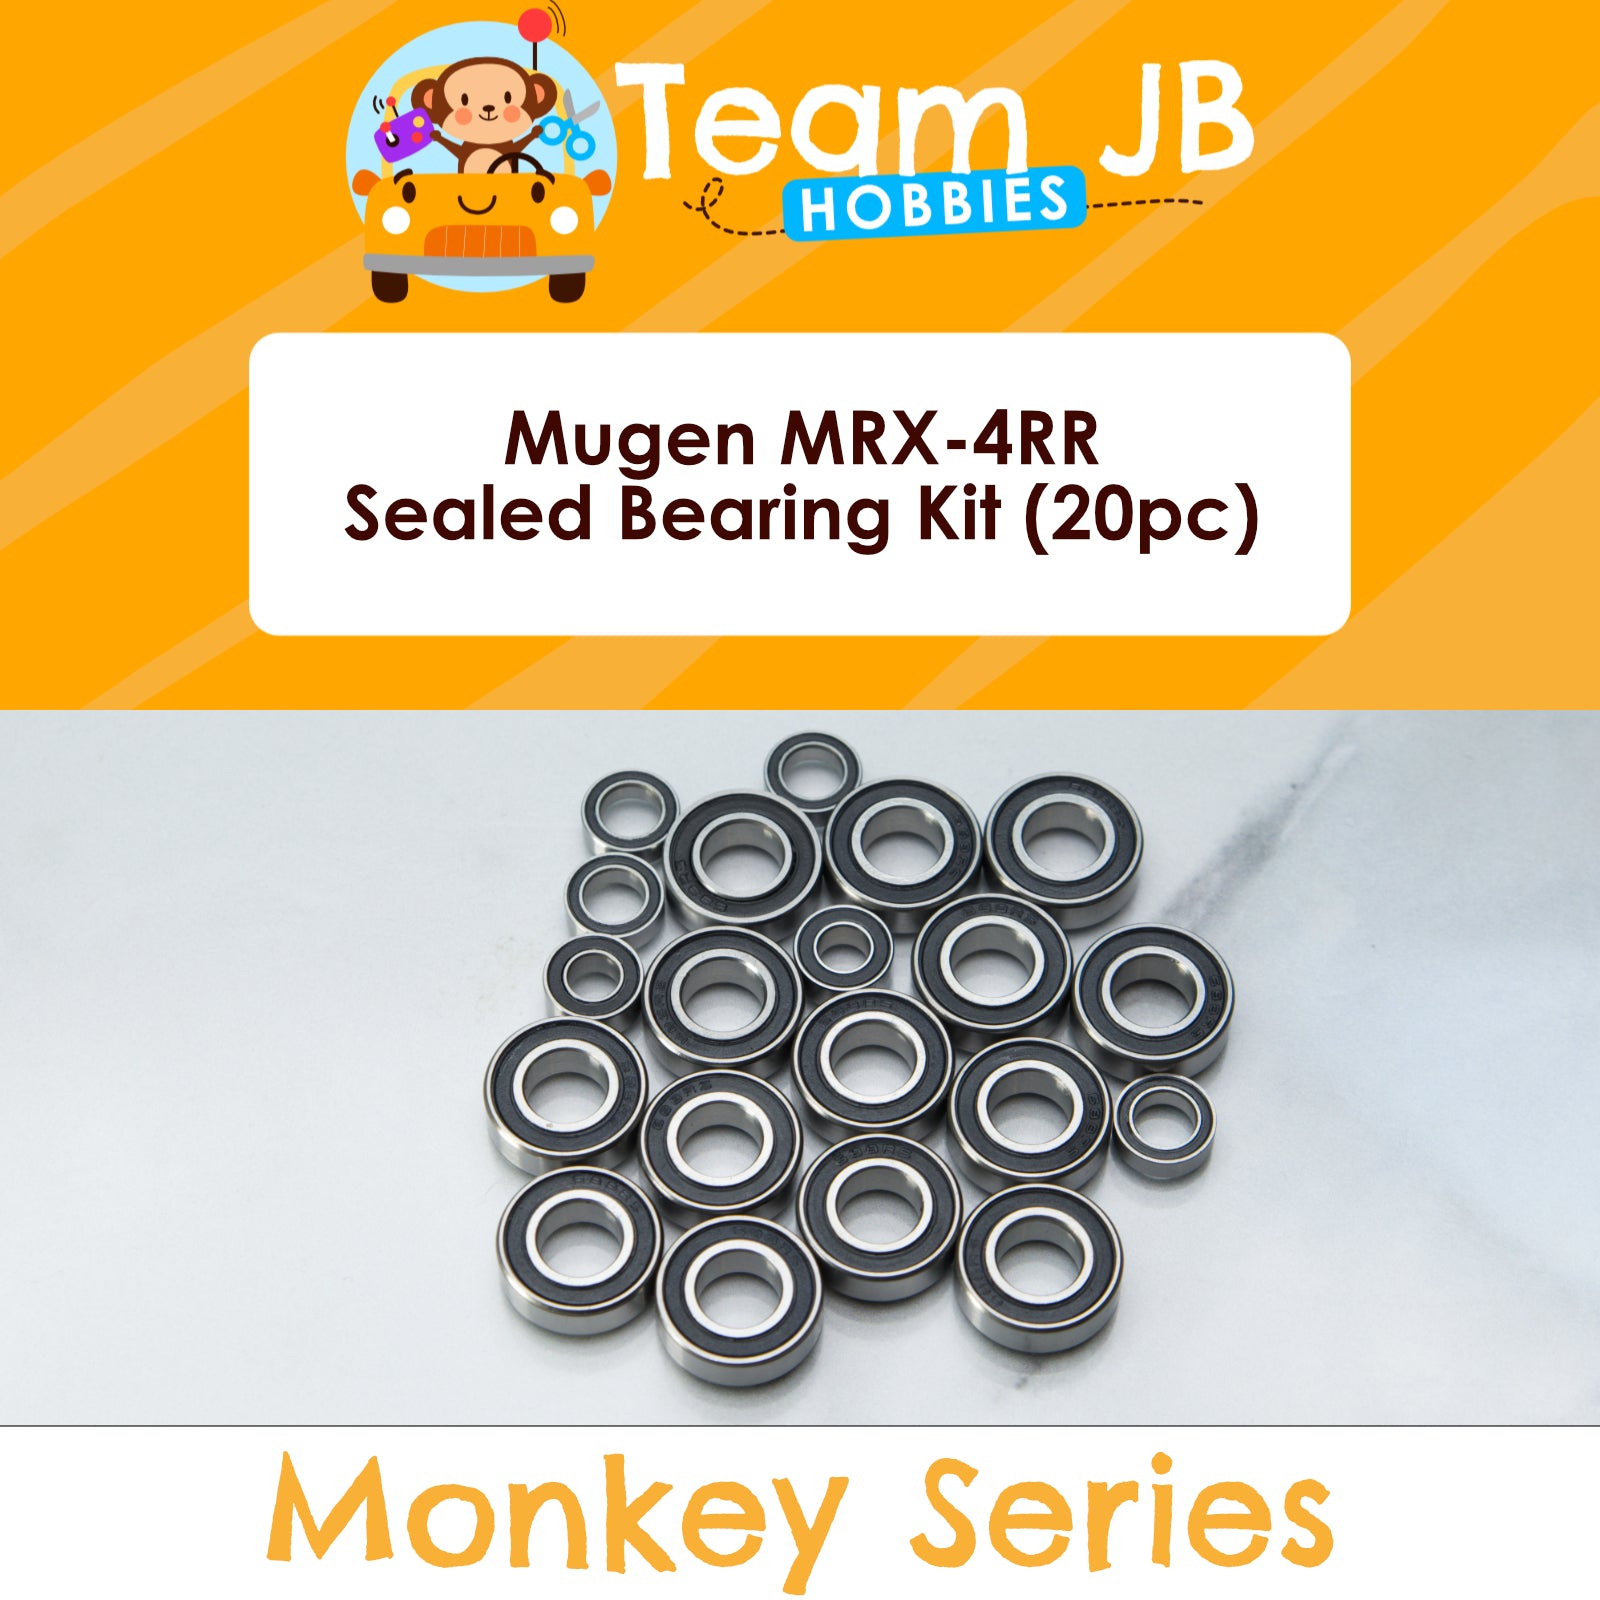 Mugen MRX-4RR - Sealed Bearing Kit